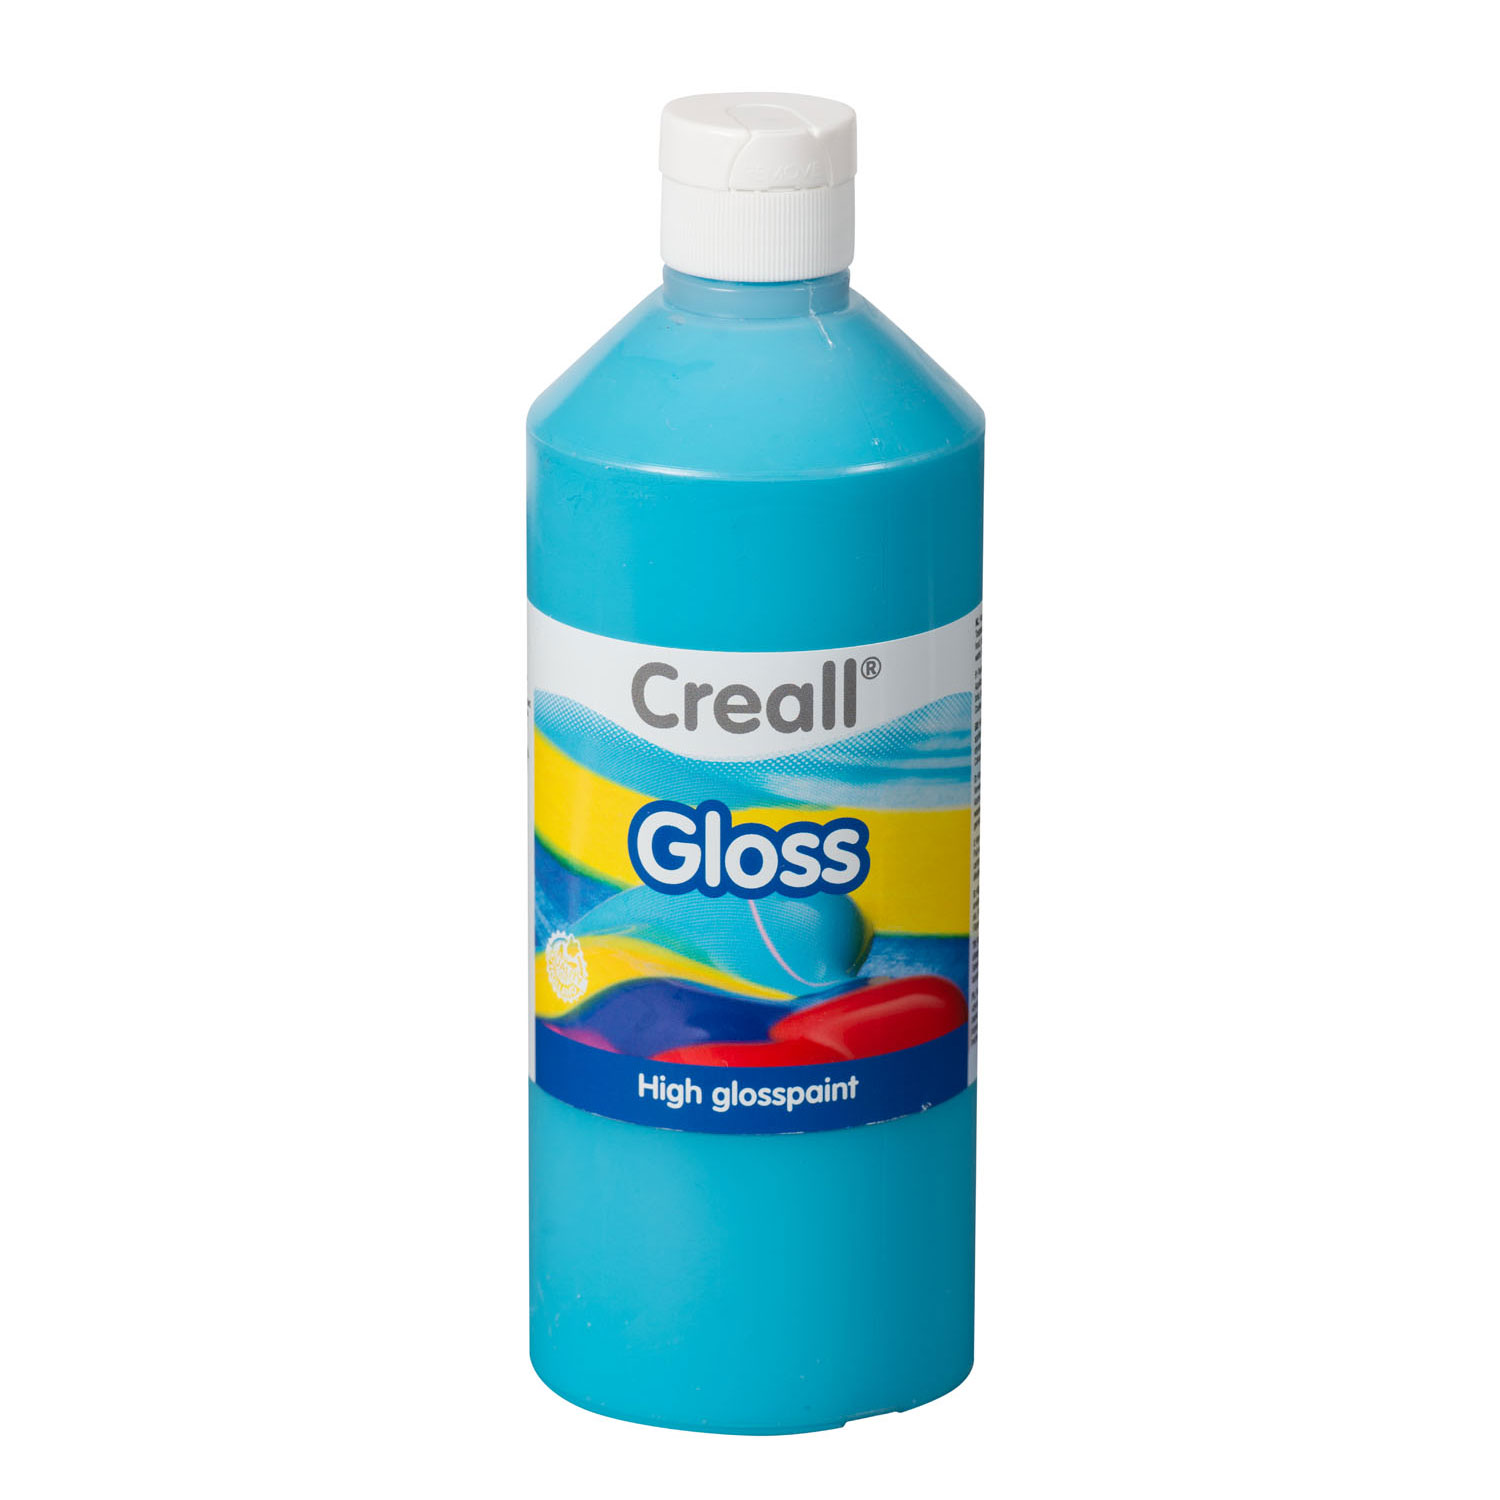 Creall Gloss Glansverf Turquoise, 500ml